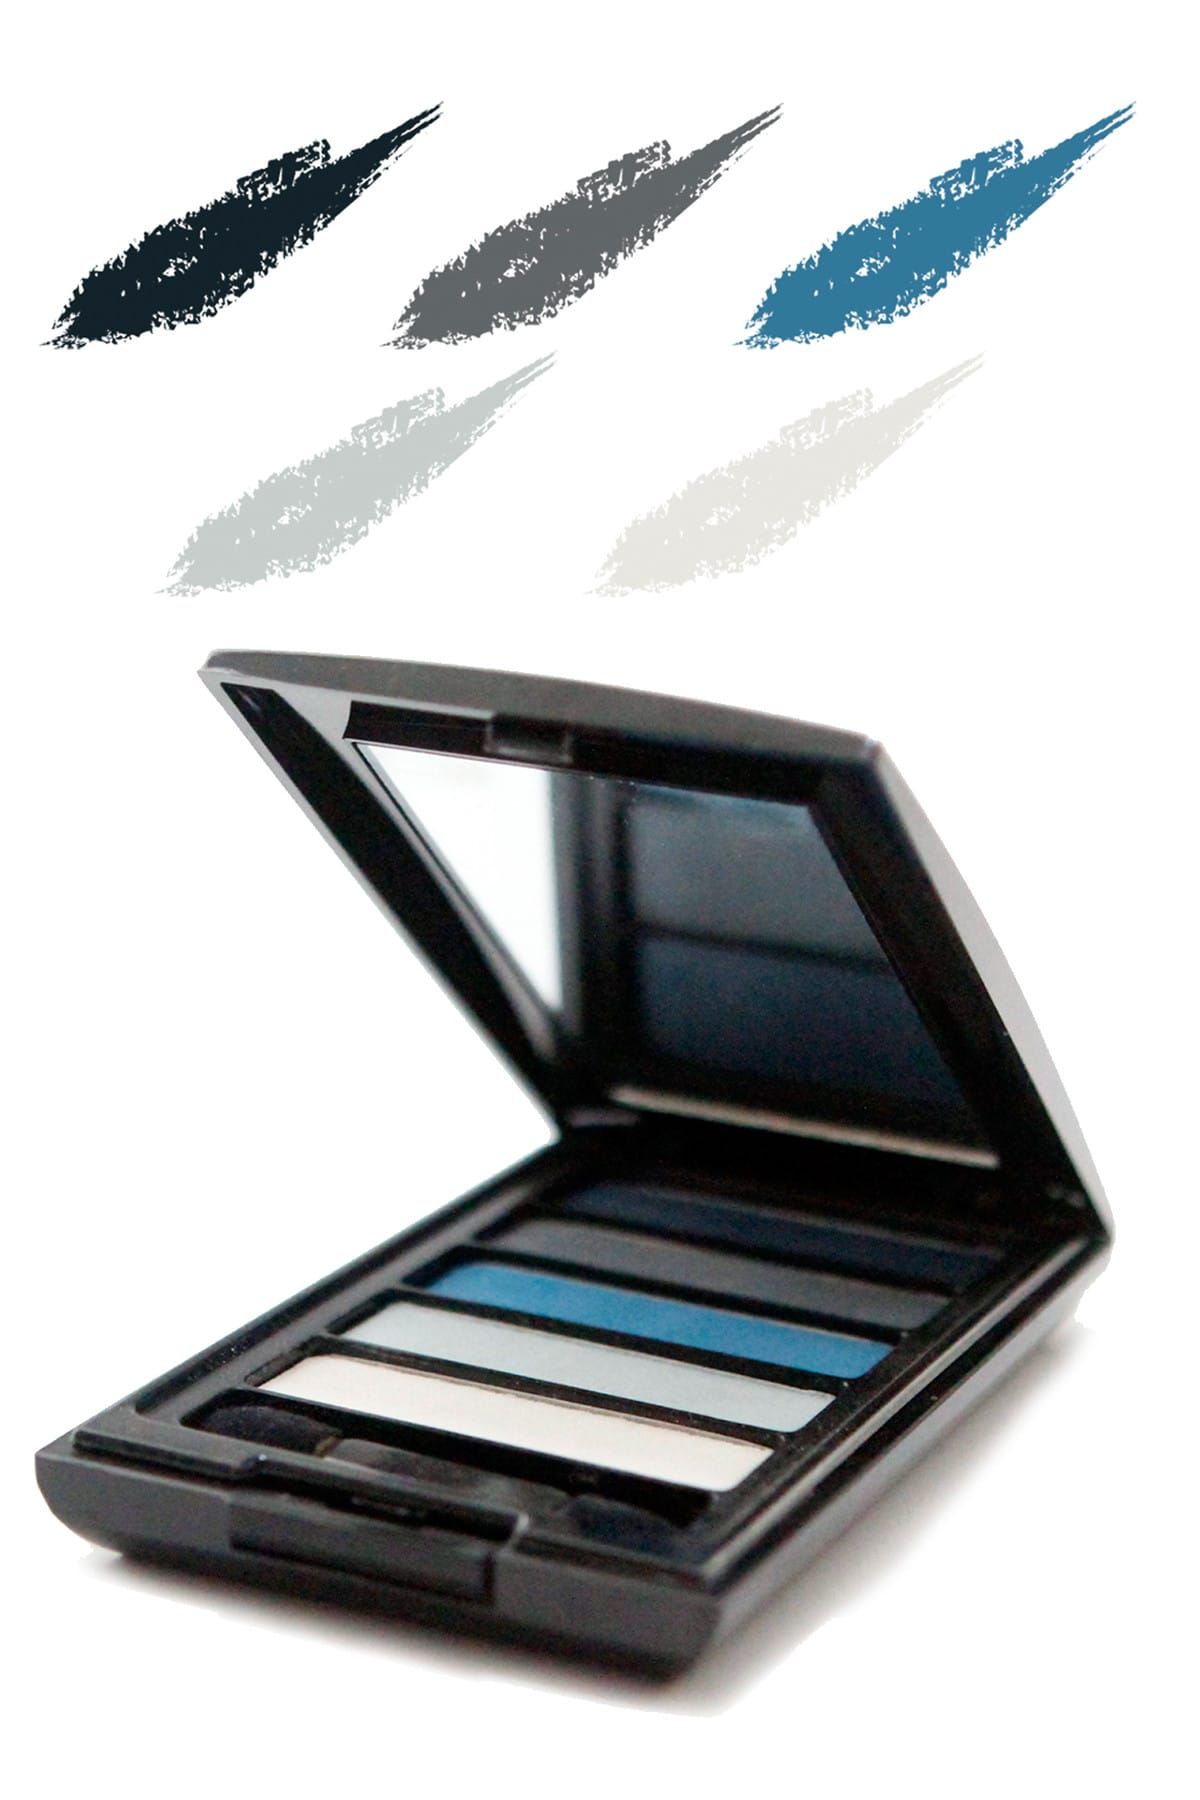 TCA Studio Make Up Göz Farı Paleti - Eyeshadow Palette 3 Blue 8680196112422